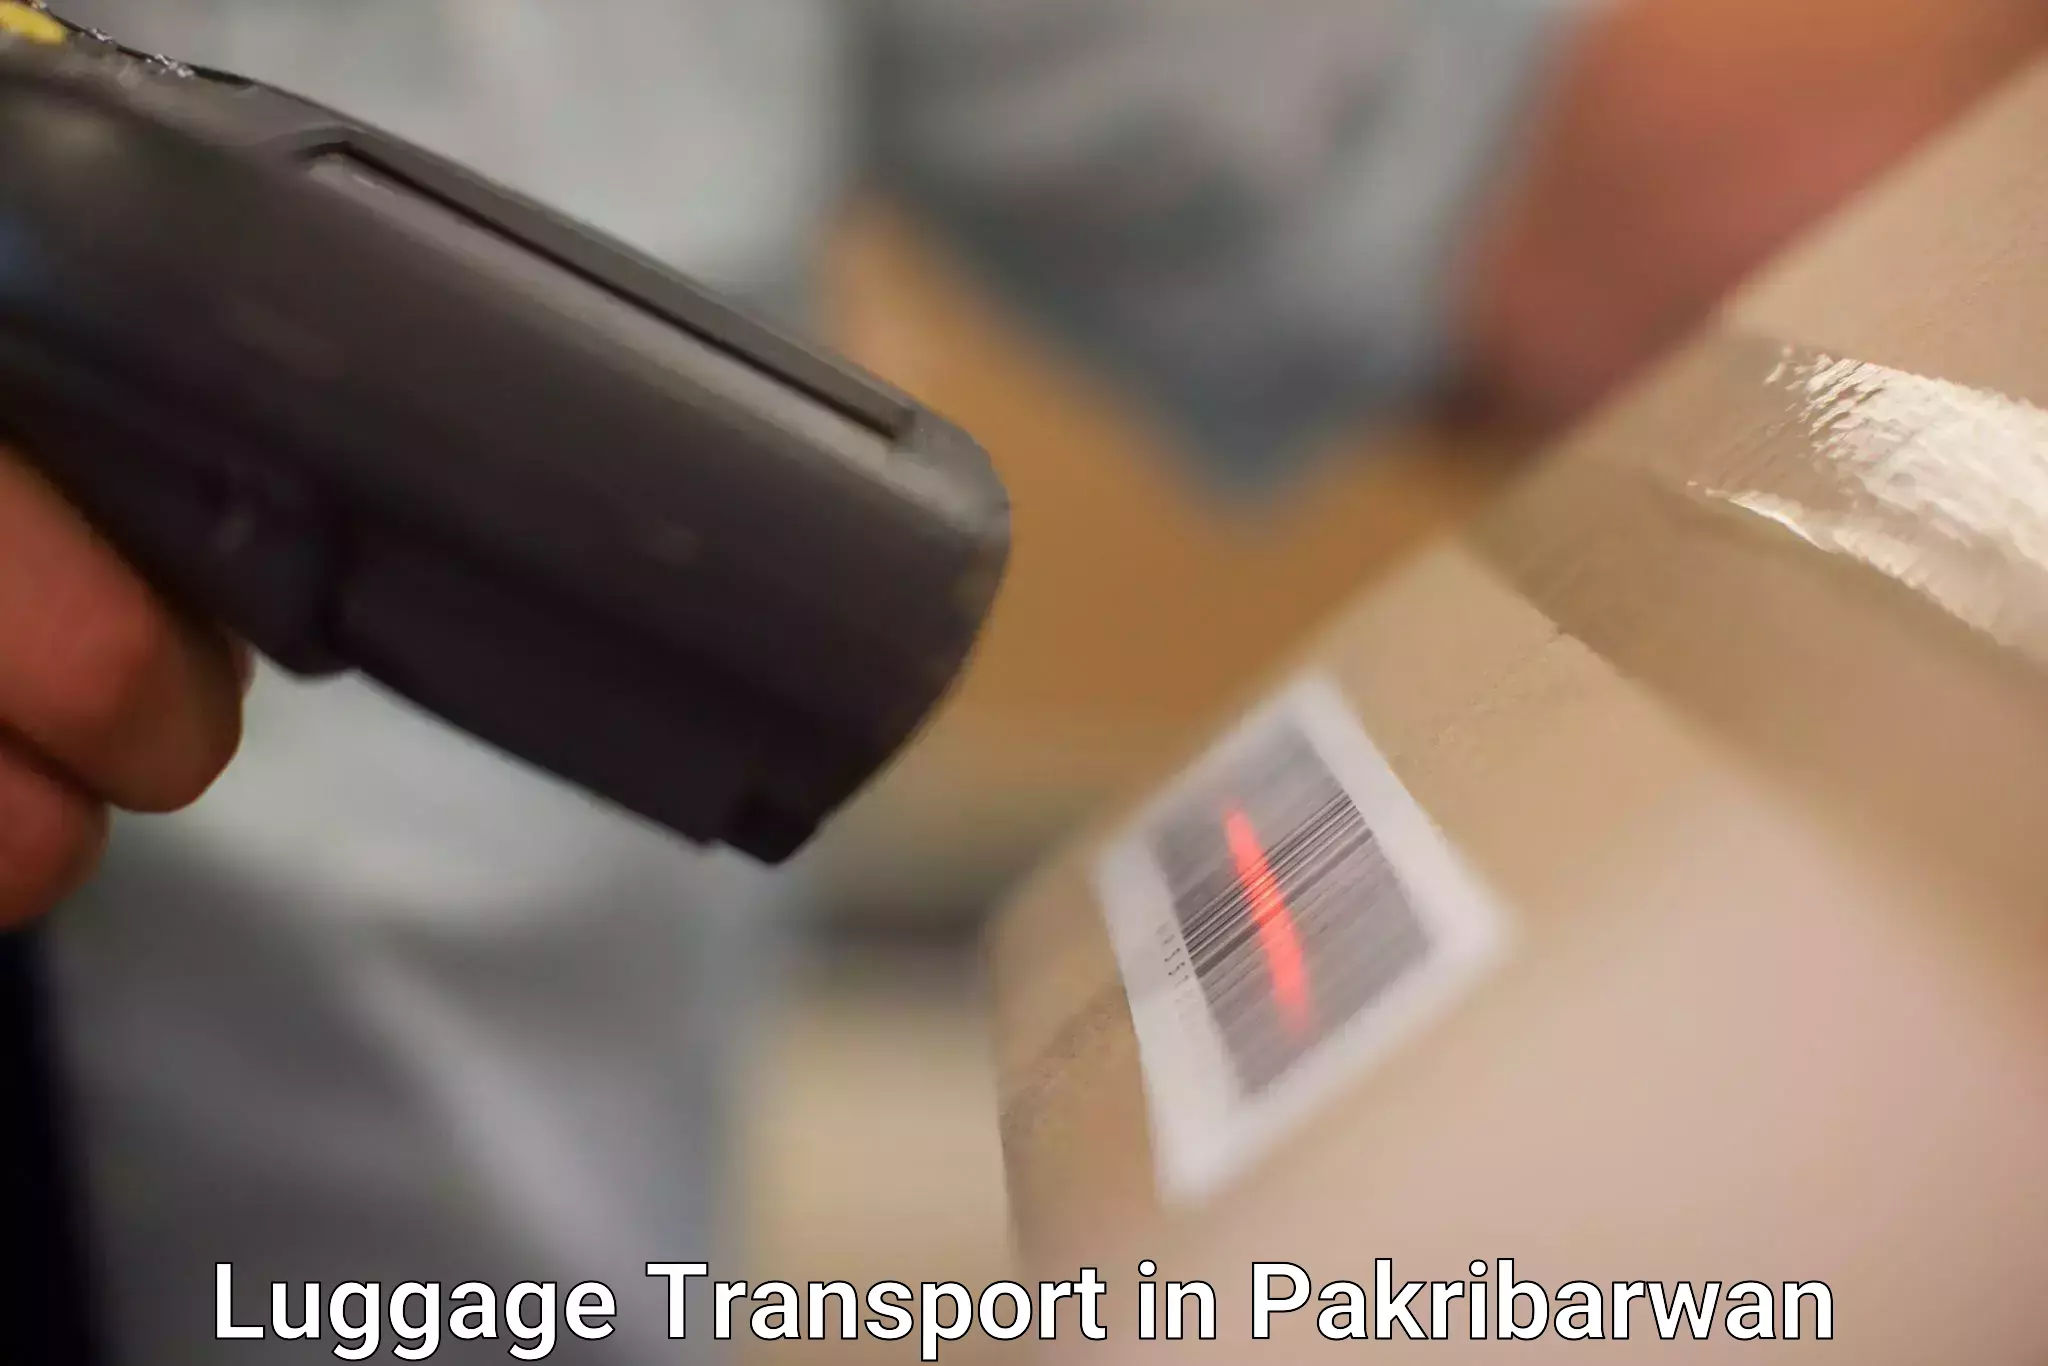 Doorstep luggage collection in Pakribarwan